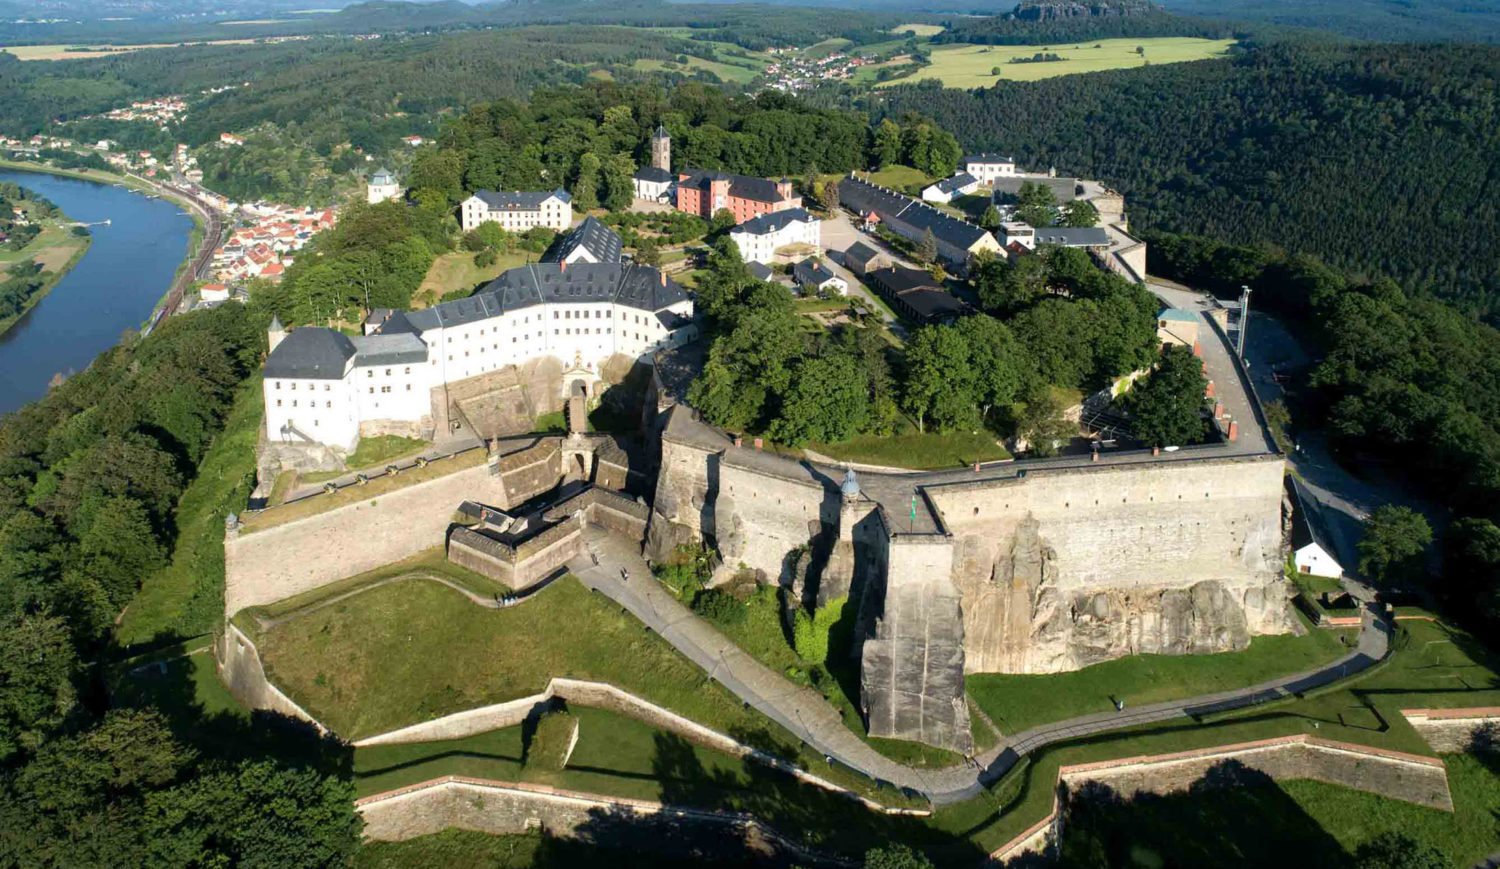 Impressive example of European fortress architecture - the Königstein Fortress